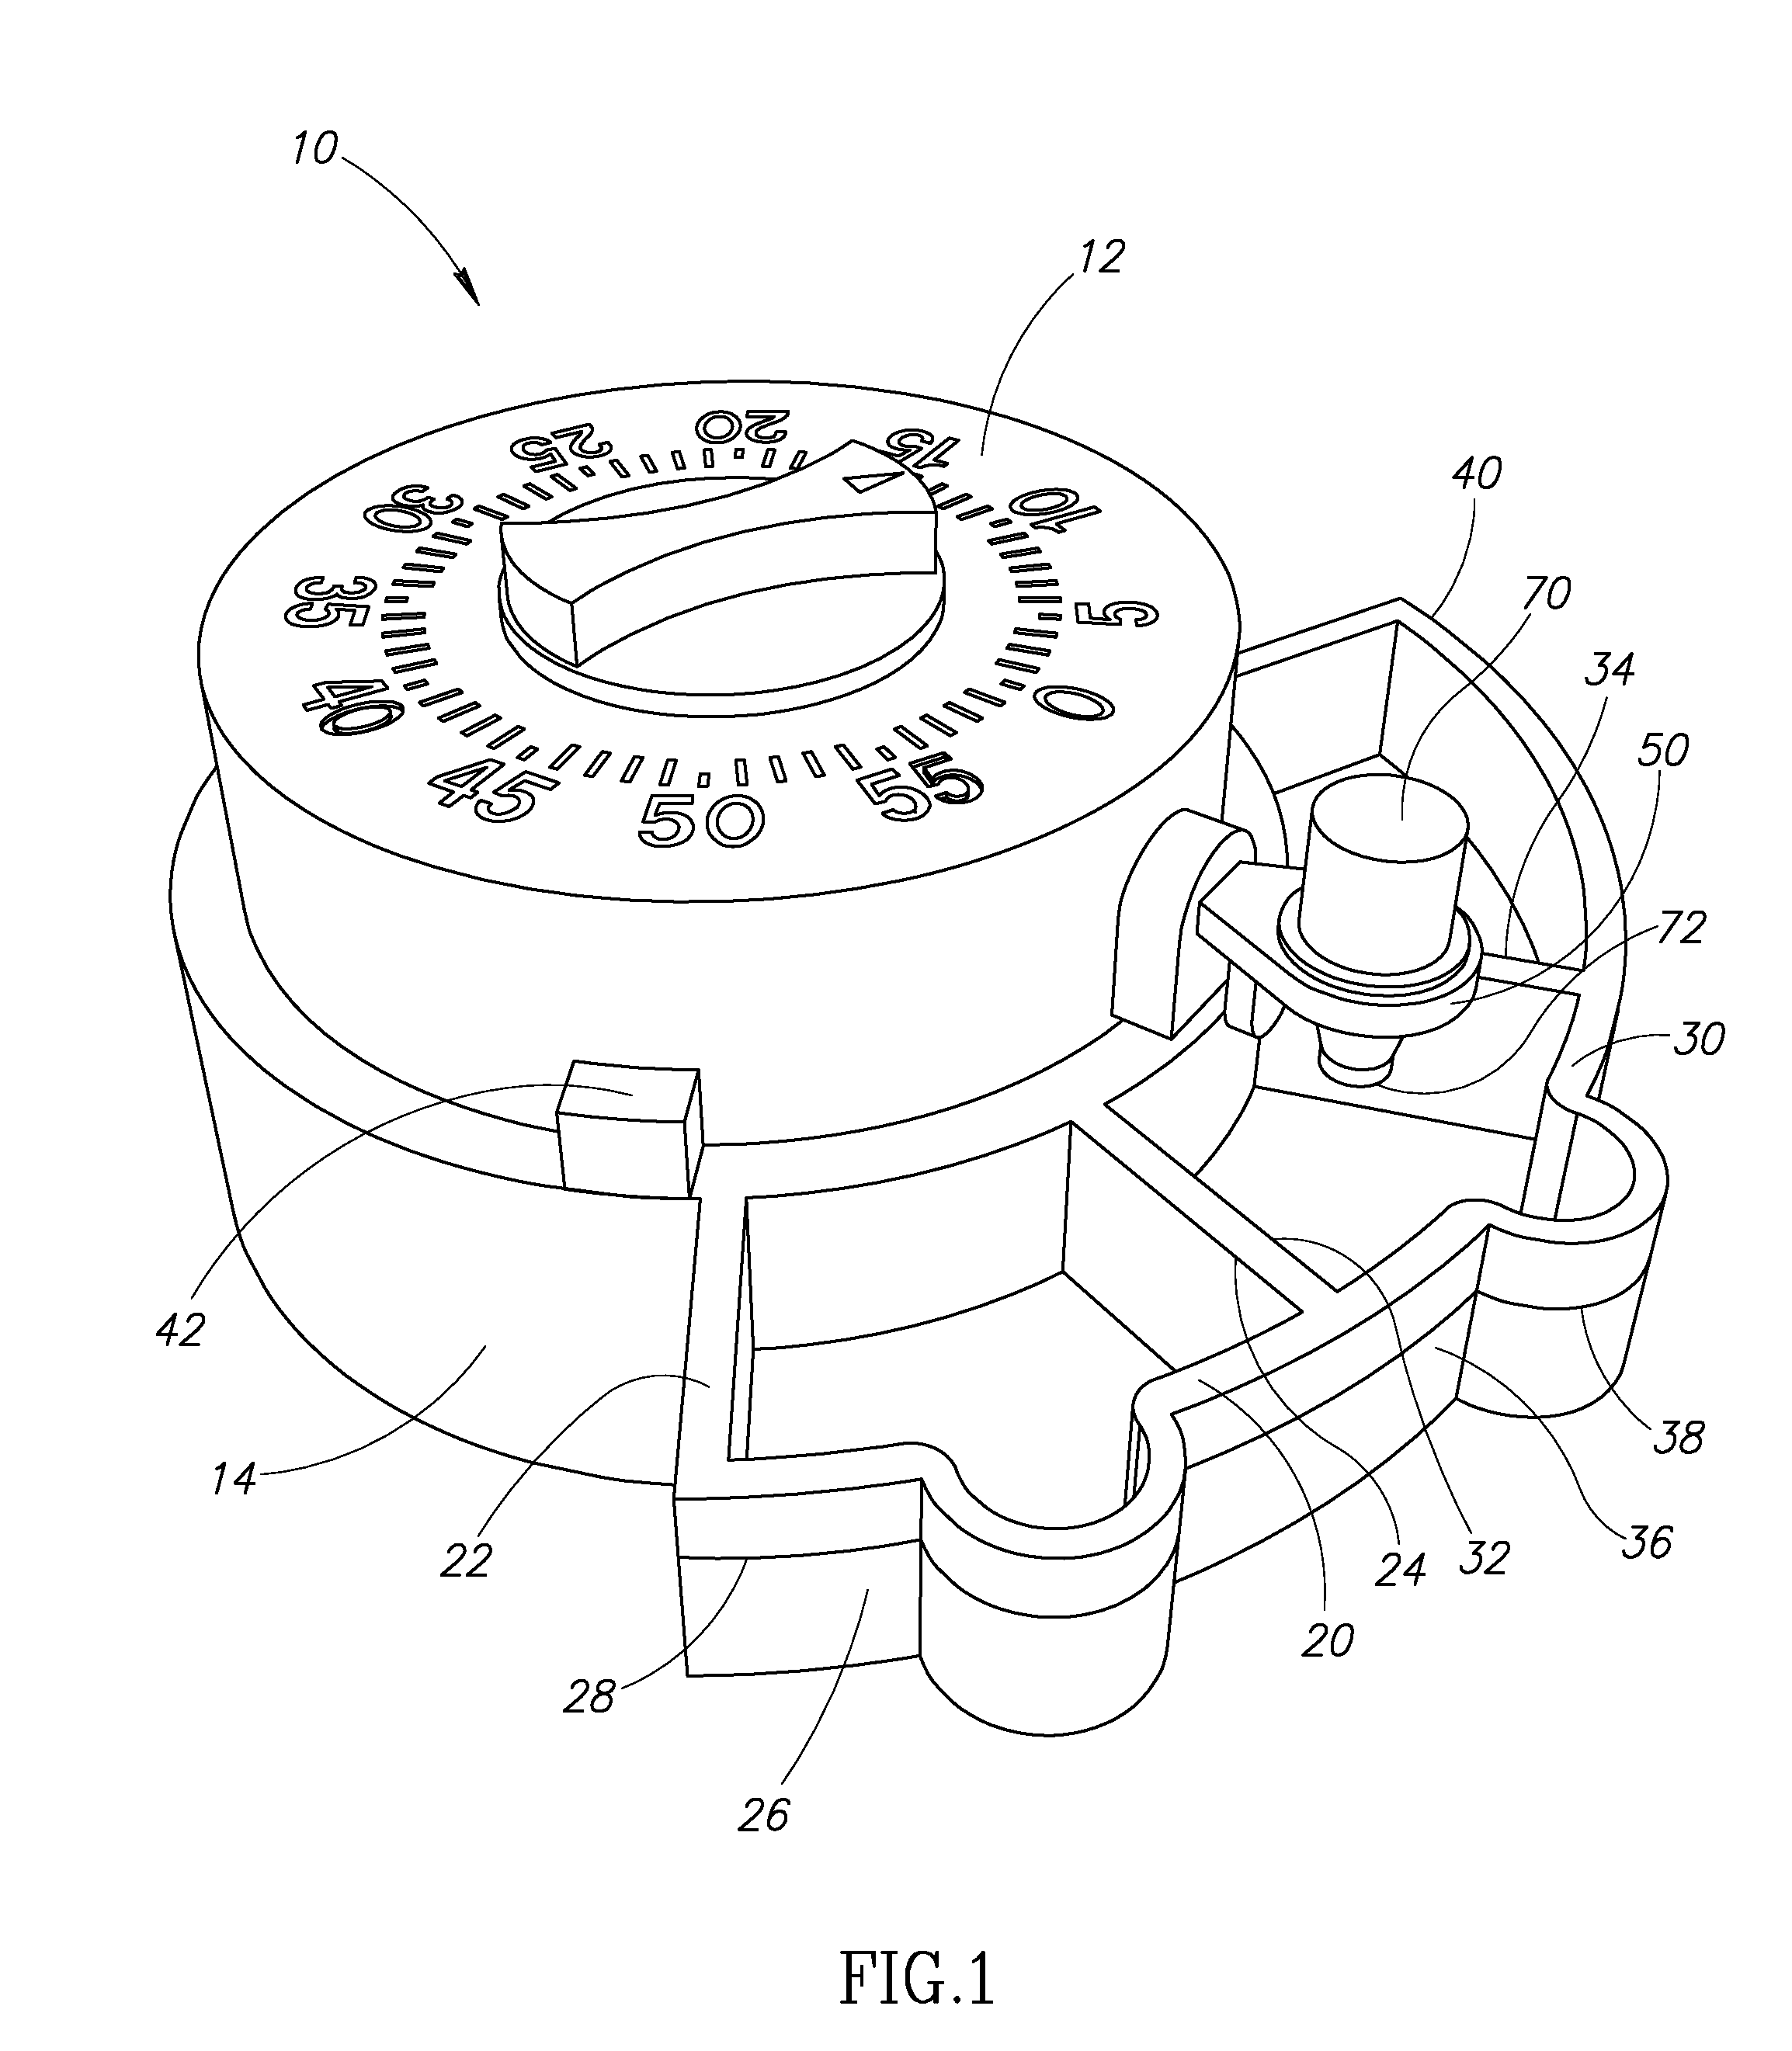 Automatic tonometer tip disinfection apparatus